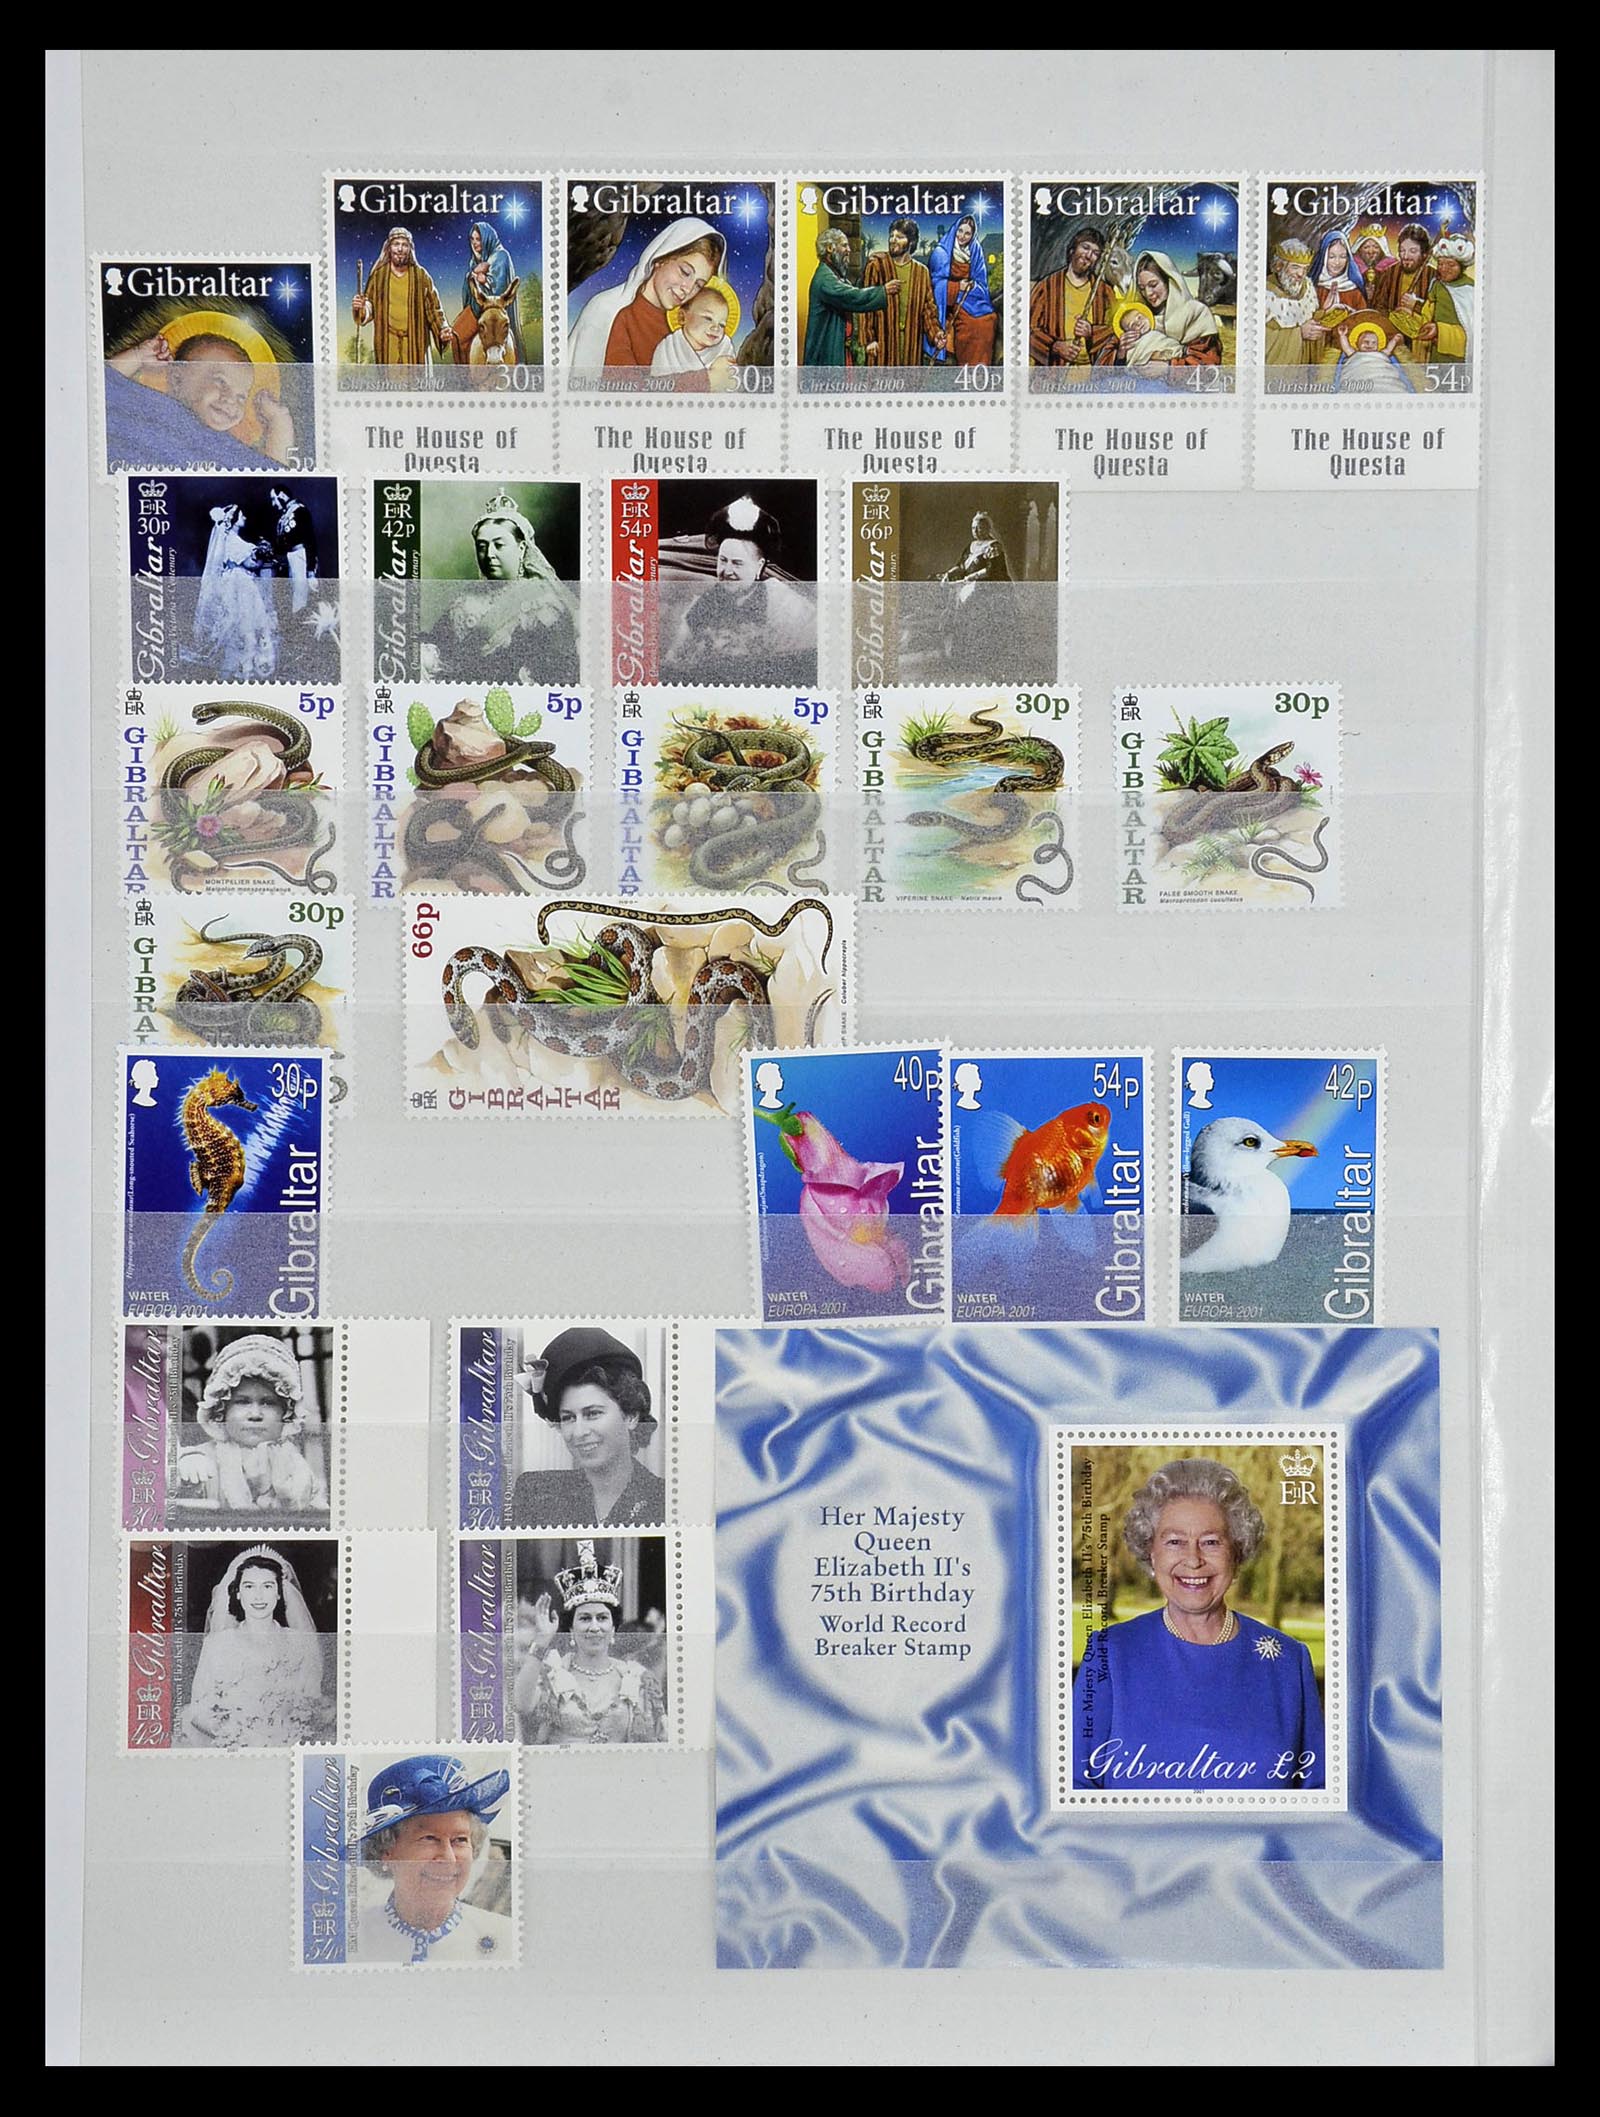 34947 105 - Stamp Collection 34947 Gibraltar 1912-2013.